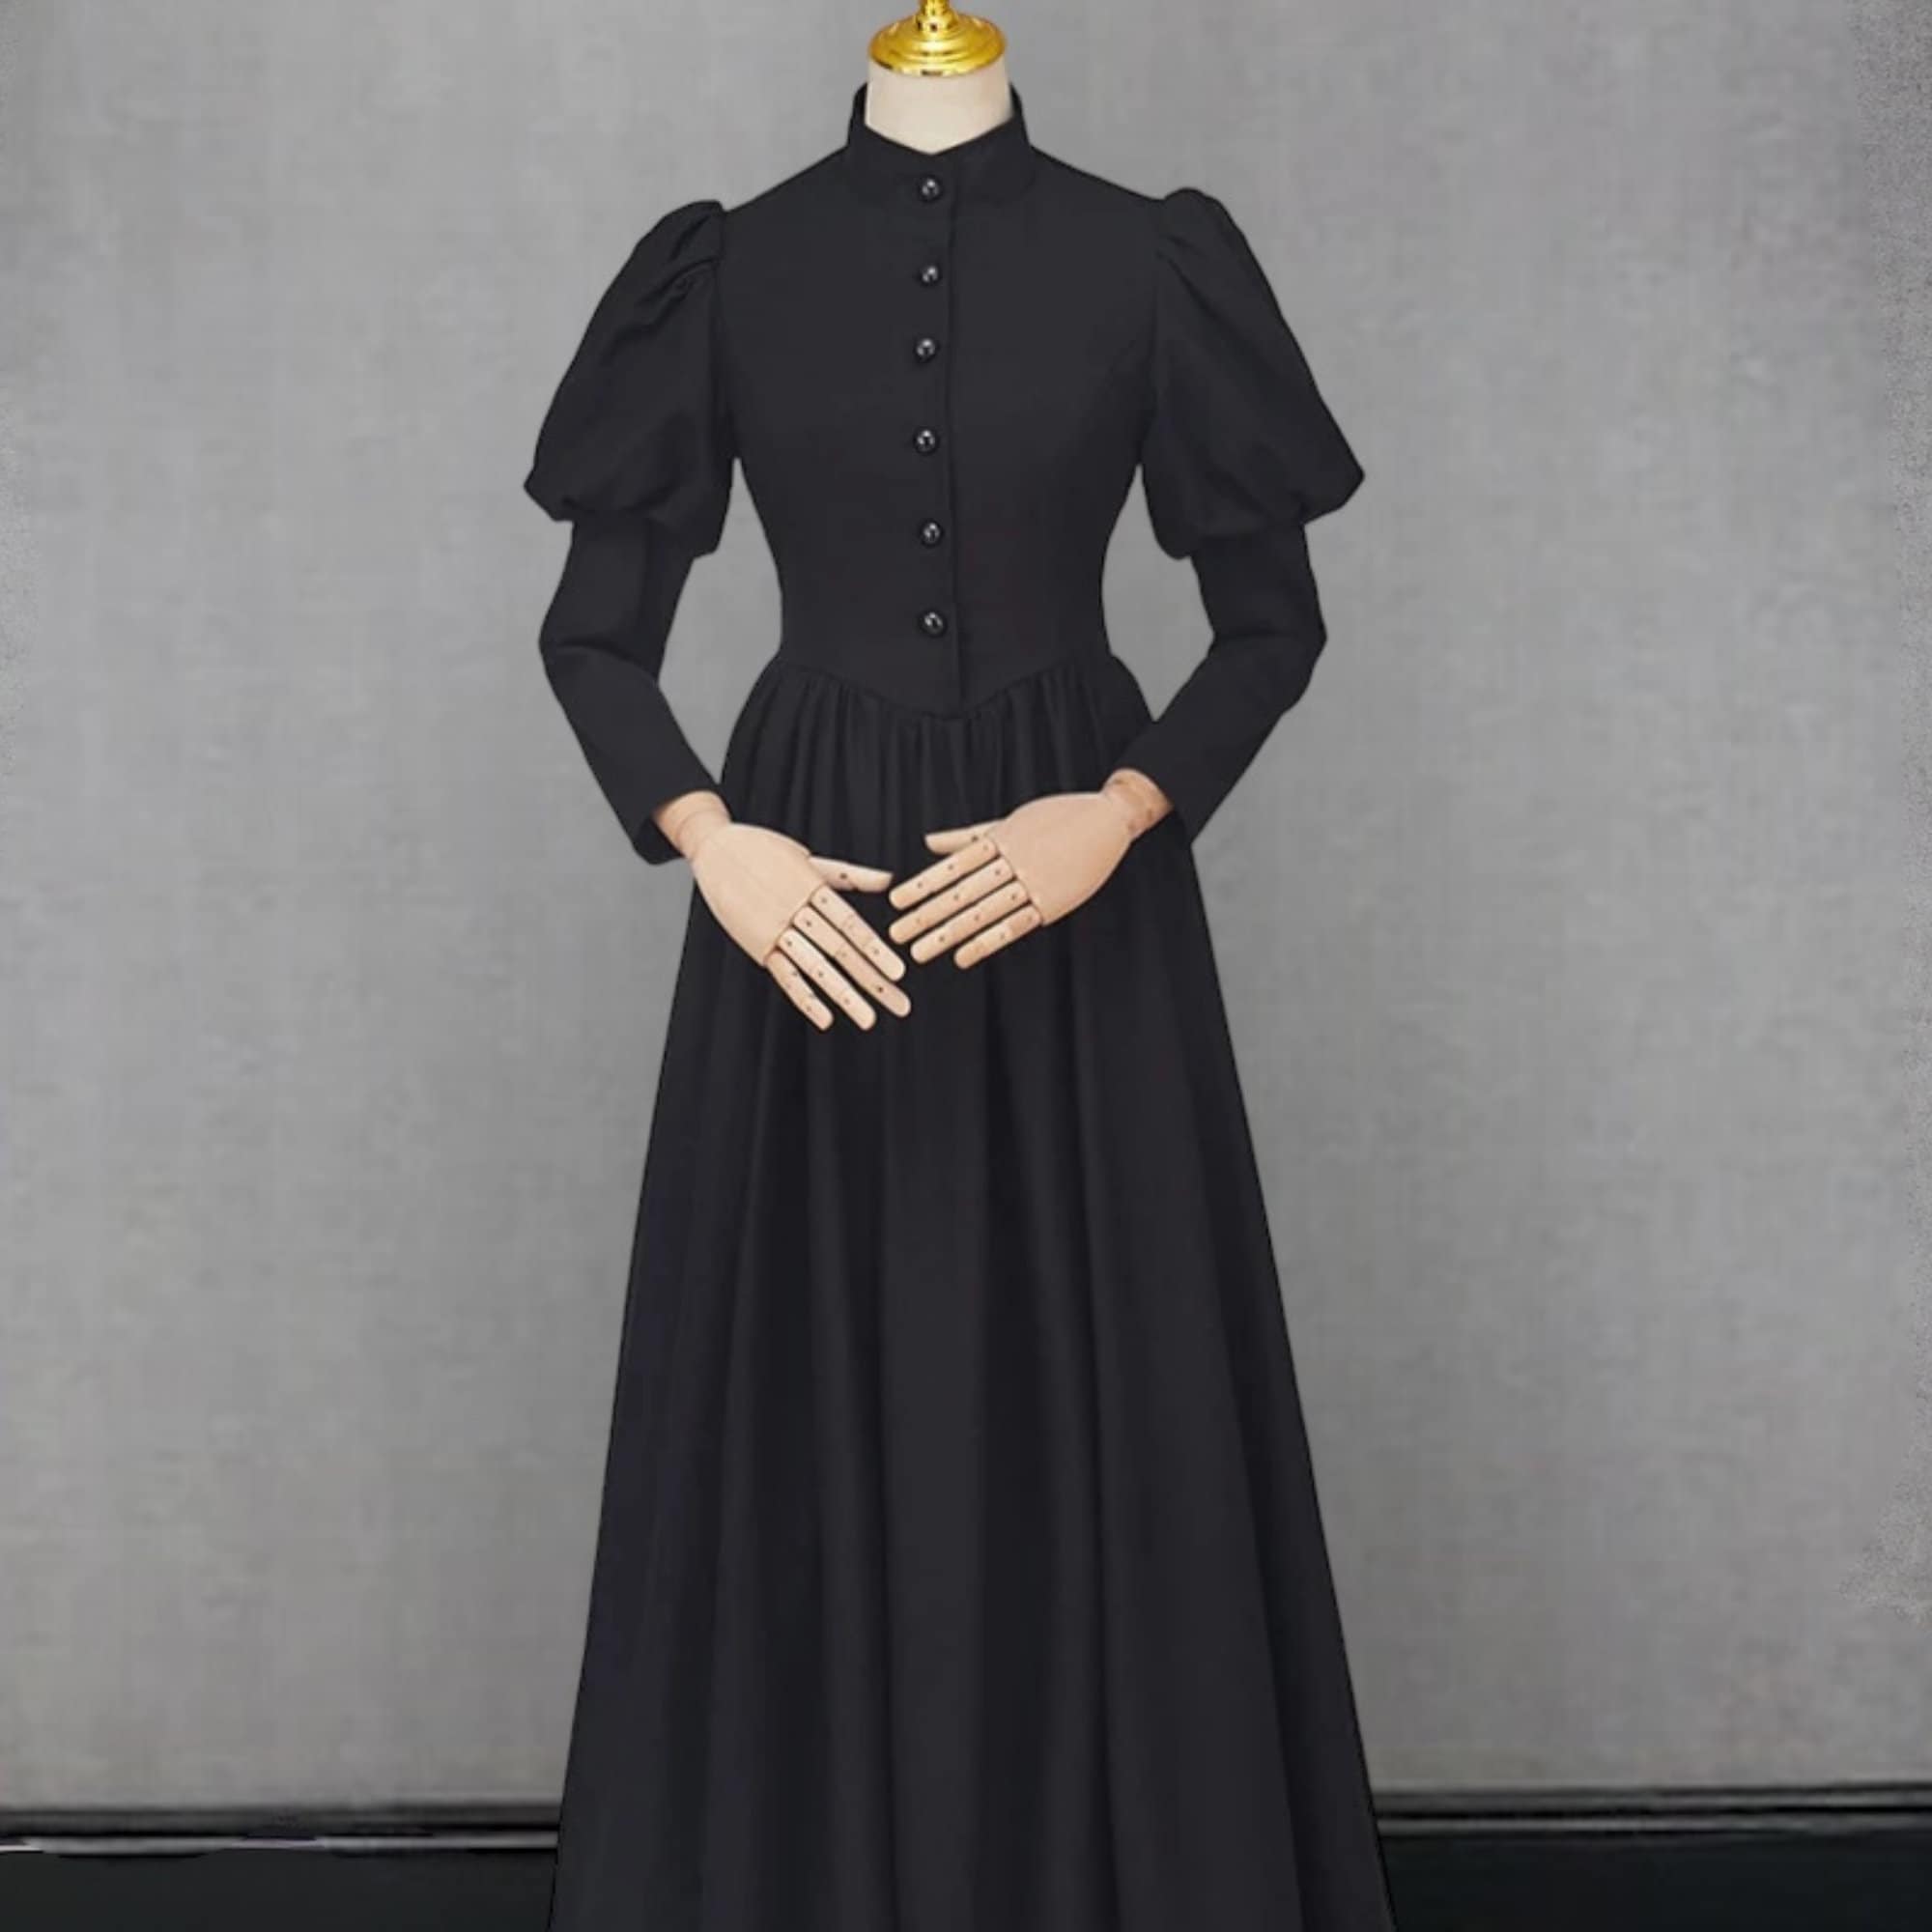 DevilInspired Gothic Victorian Dresses: December 2012  Gothic fashion  victorian, Gothic victorian dresses, Gothic fashion